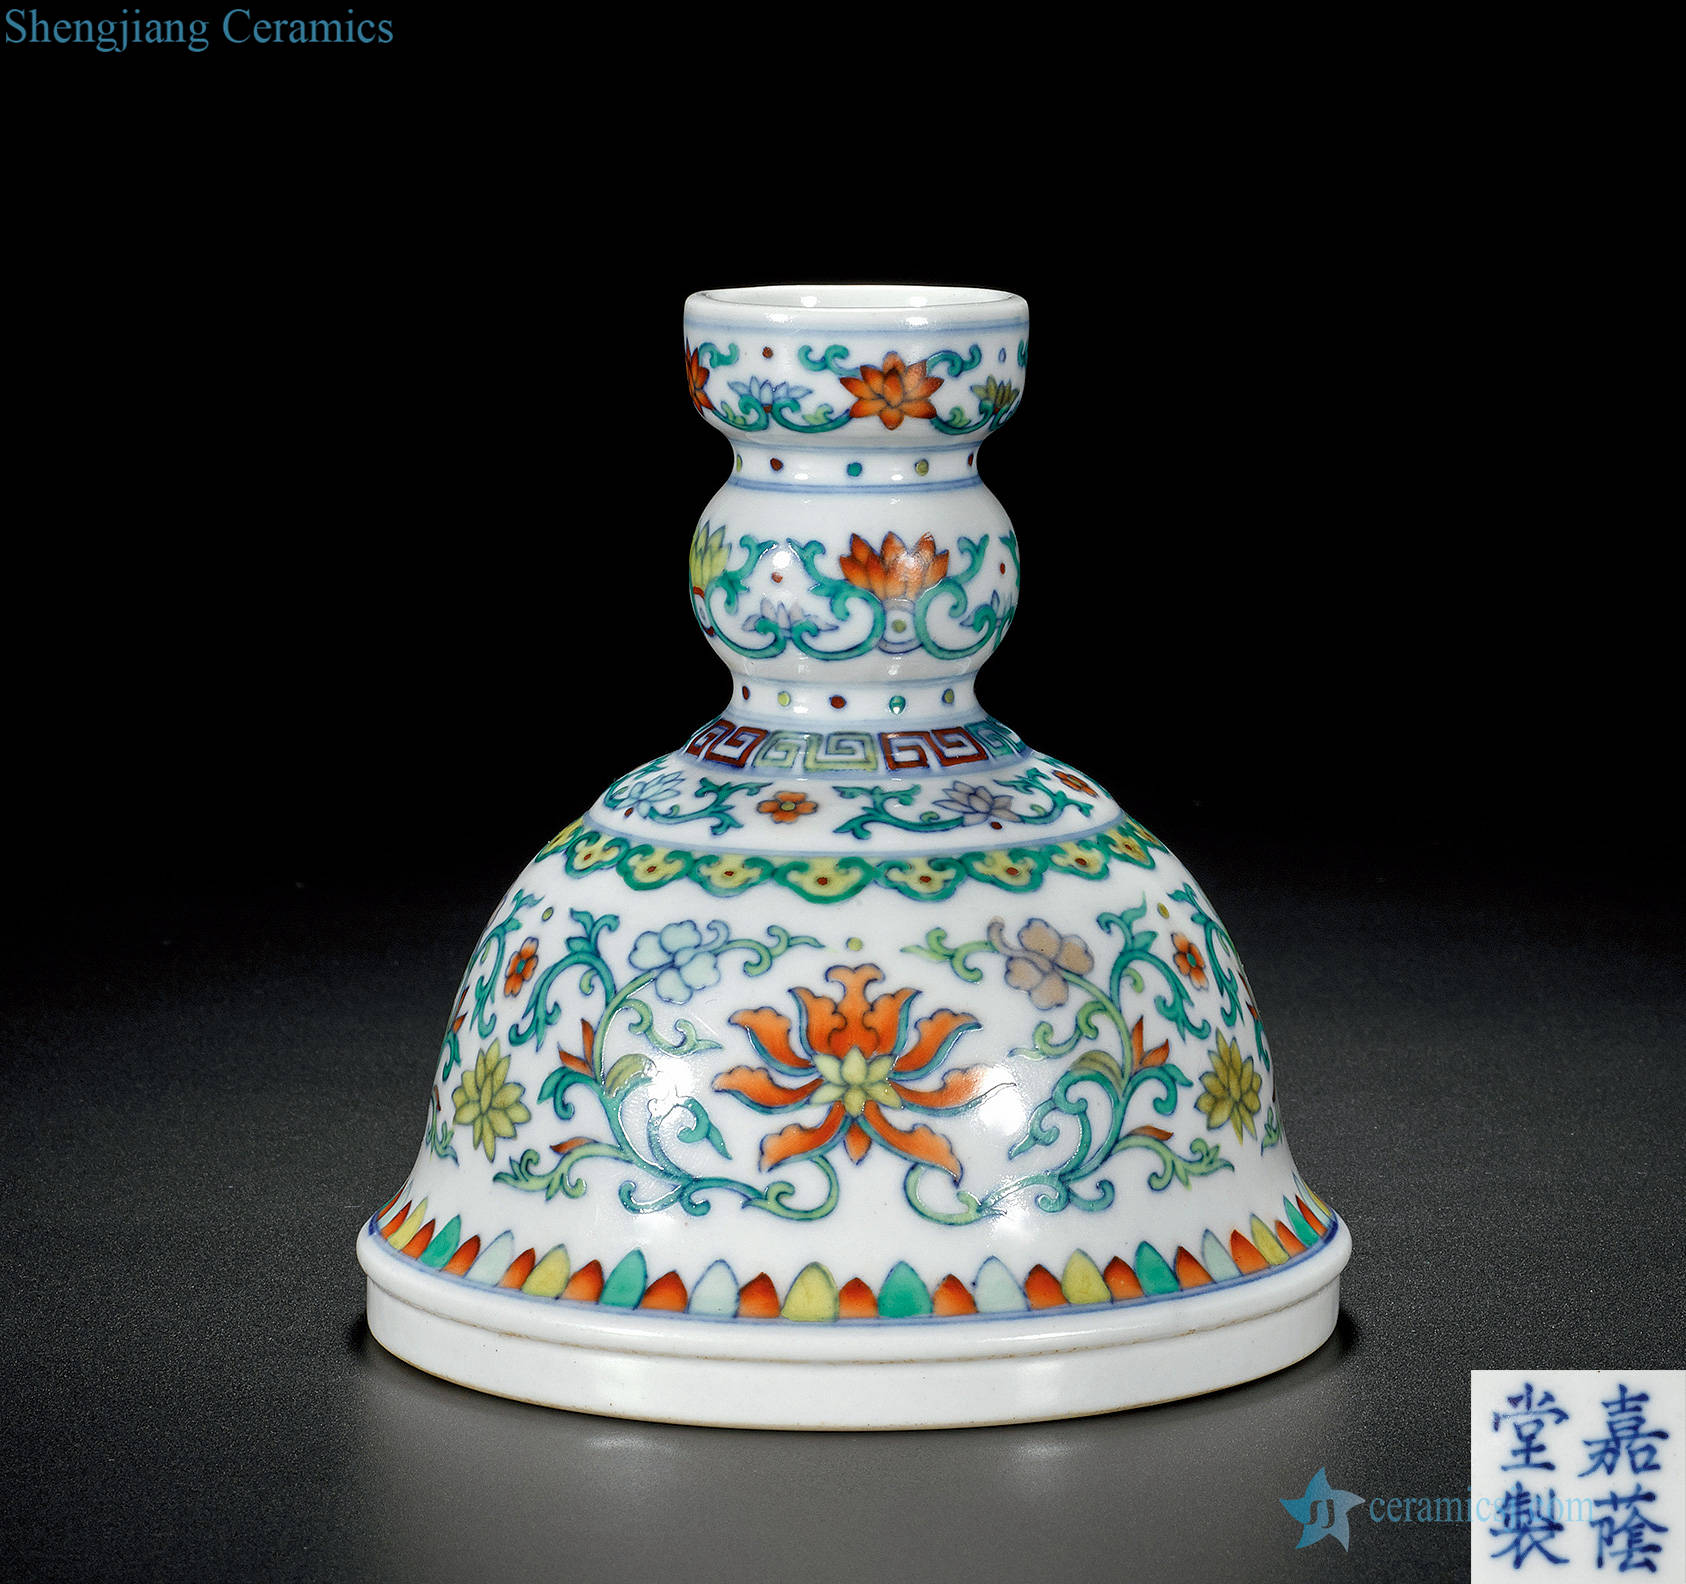 Qing daoguang bucket color flower grain candlesticks